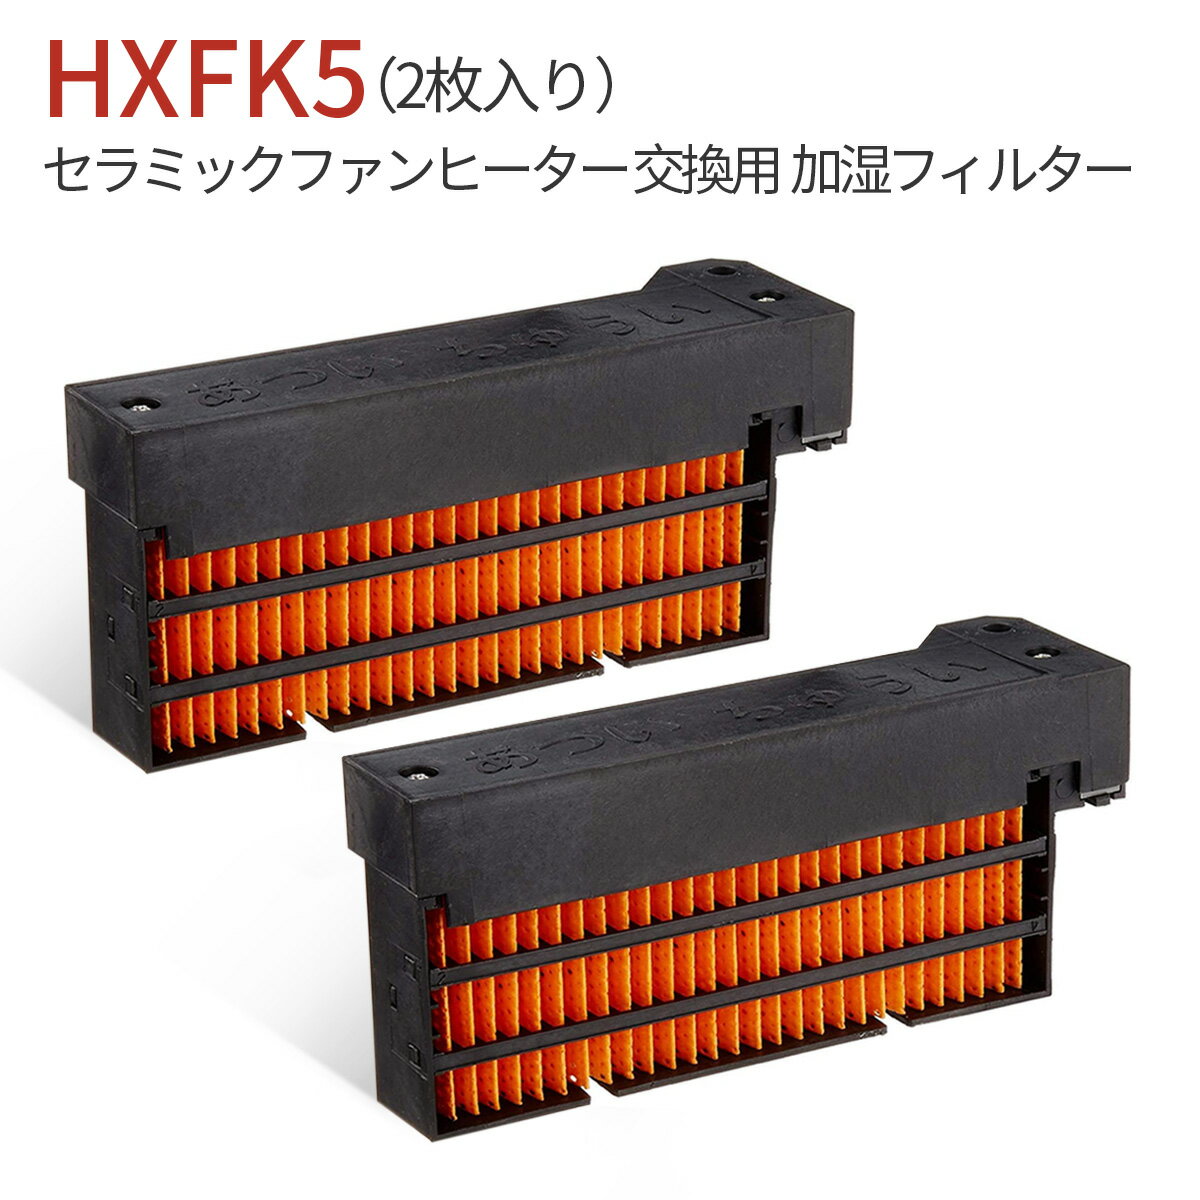 HX-FK5 シャープ 加湿フィルター hx-fk5 (HX-FK2 HX-FK3 HX-FK4 HX-FK6 と同等品) セラミックファンヒーター 交換用 フィルター 「互換品/2枚入り」